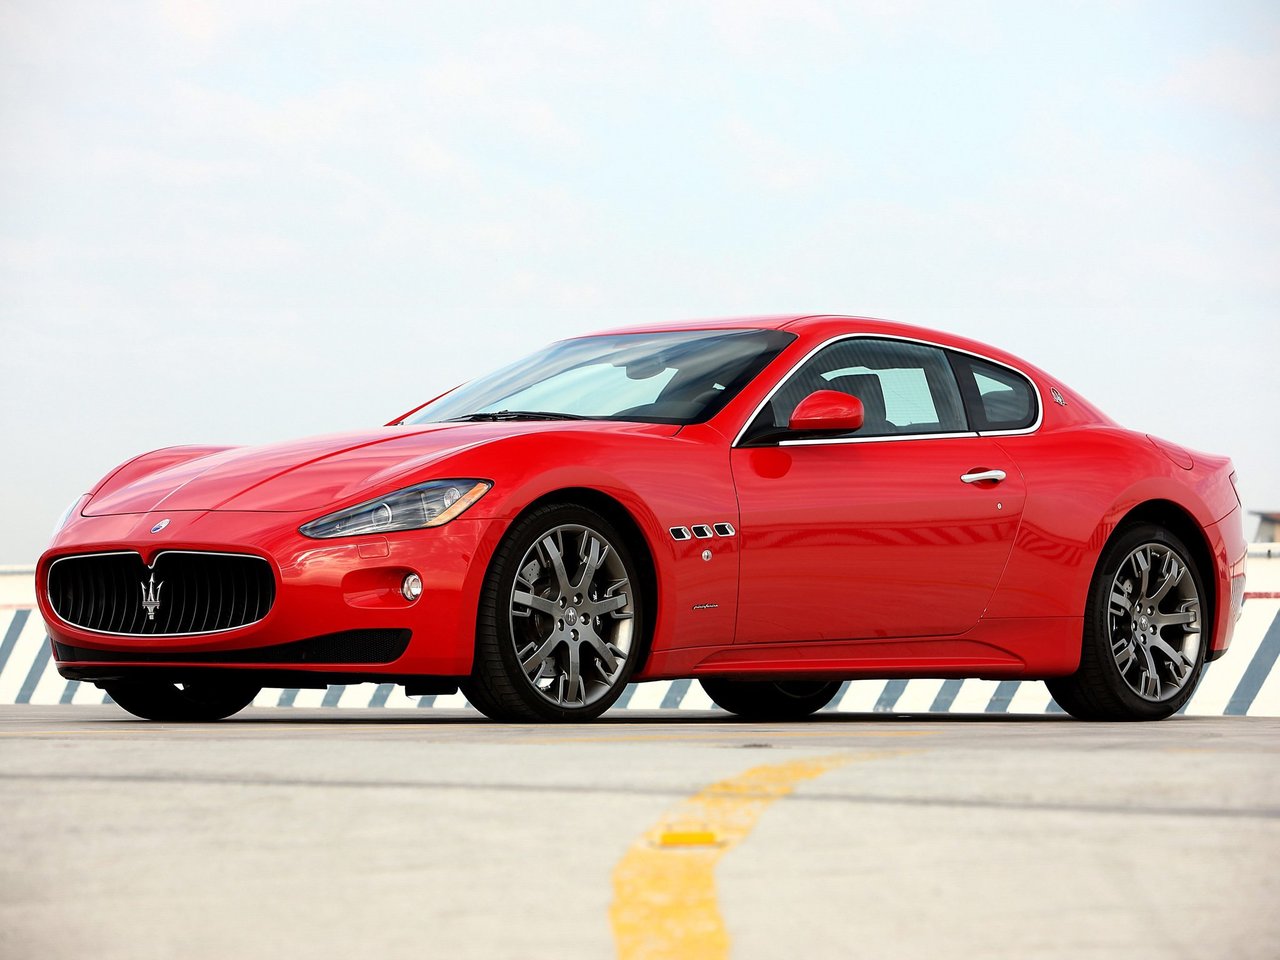 Расход газа двух комплектаций купе Maserati GranTurismo. Разница стоимости заправки газом и бензином. Автономный пробег до и после установки ГБО.